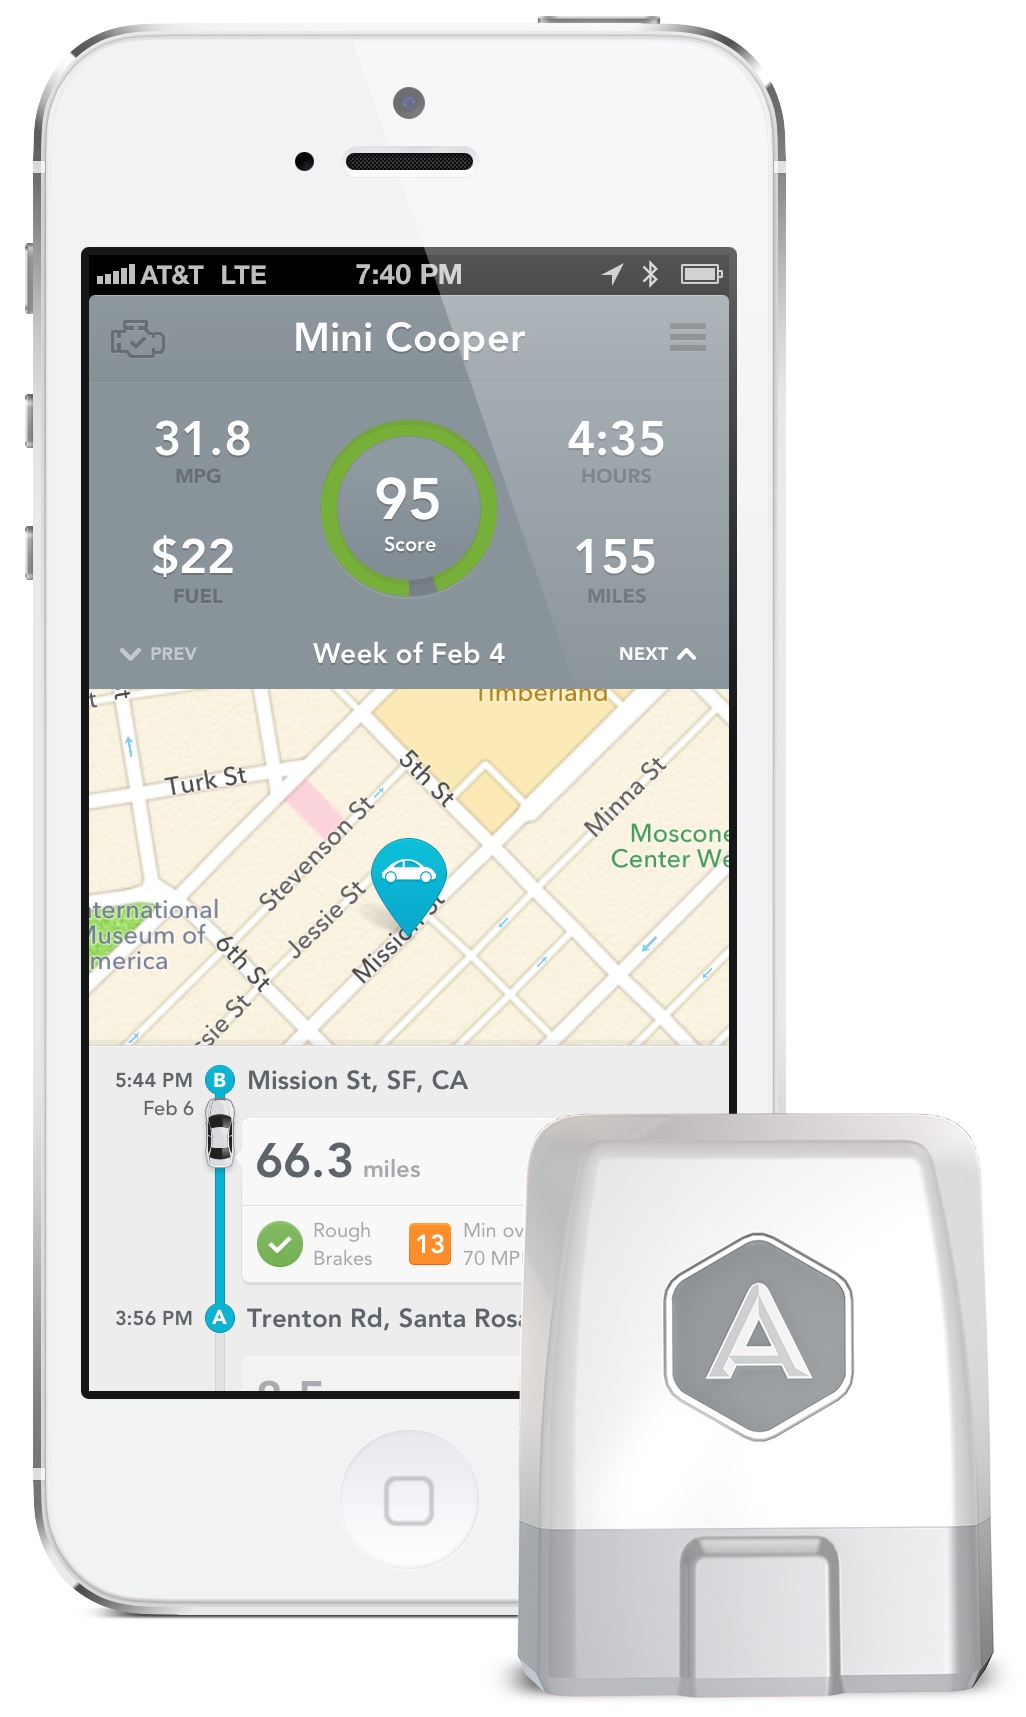 Automatic smart driving assistant Nest integration